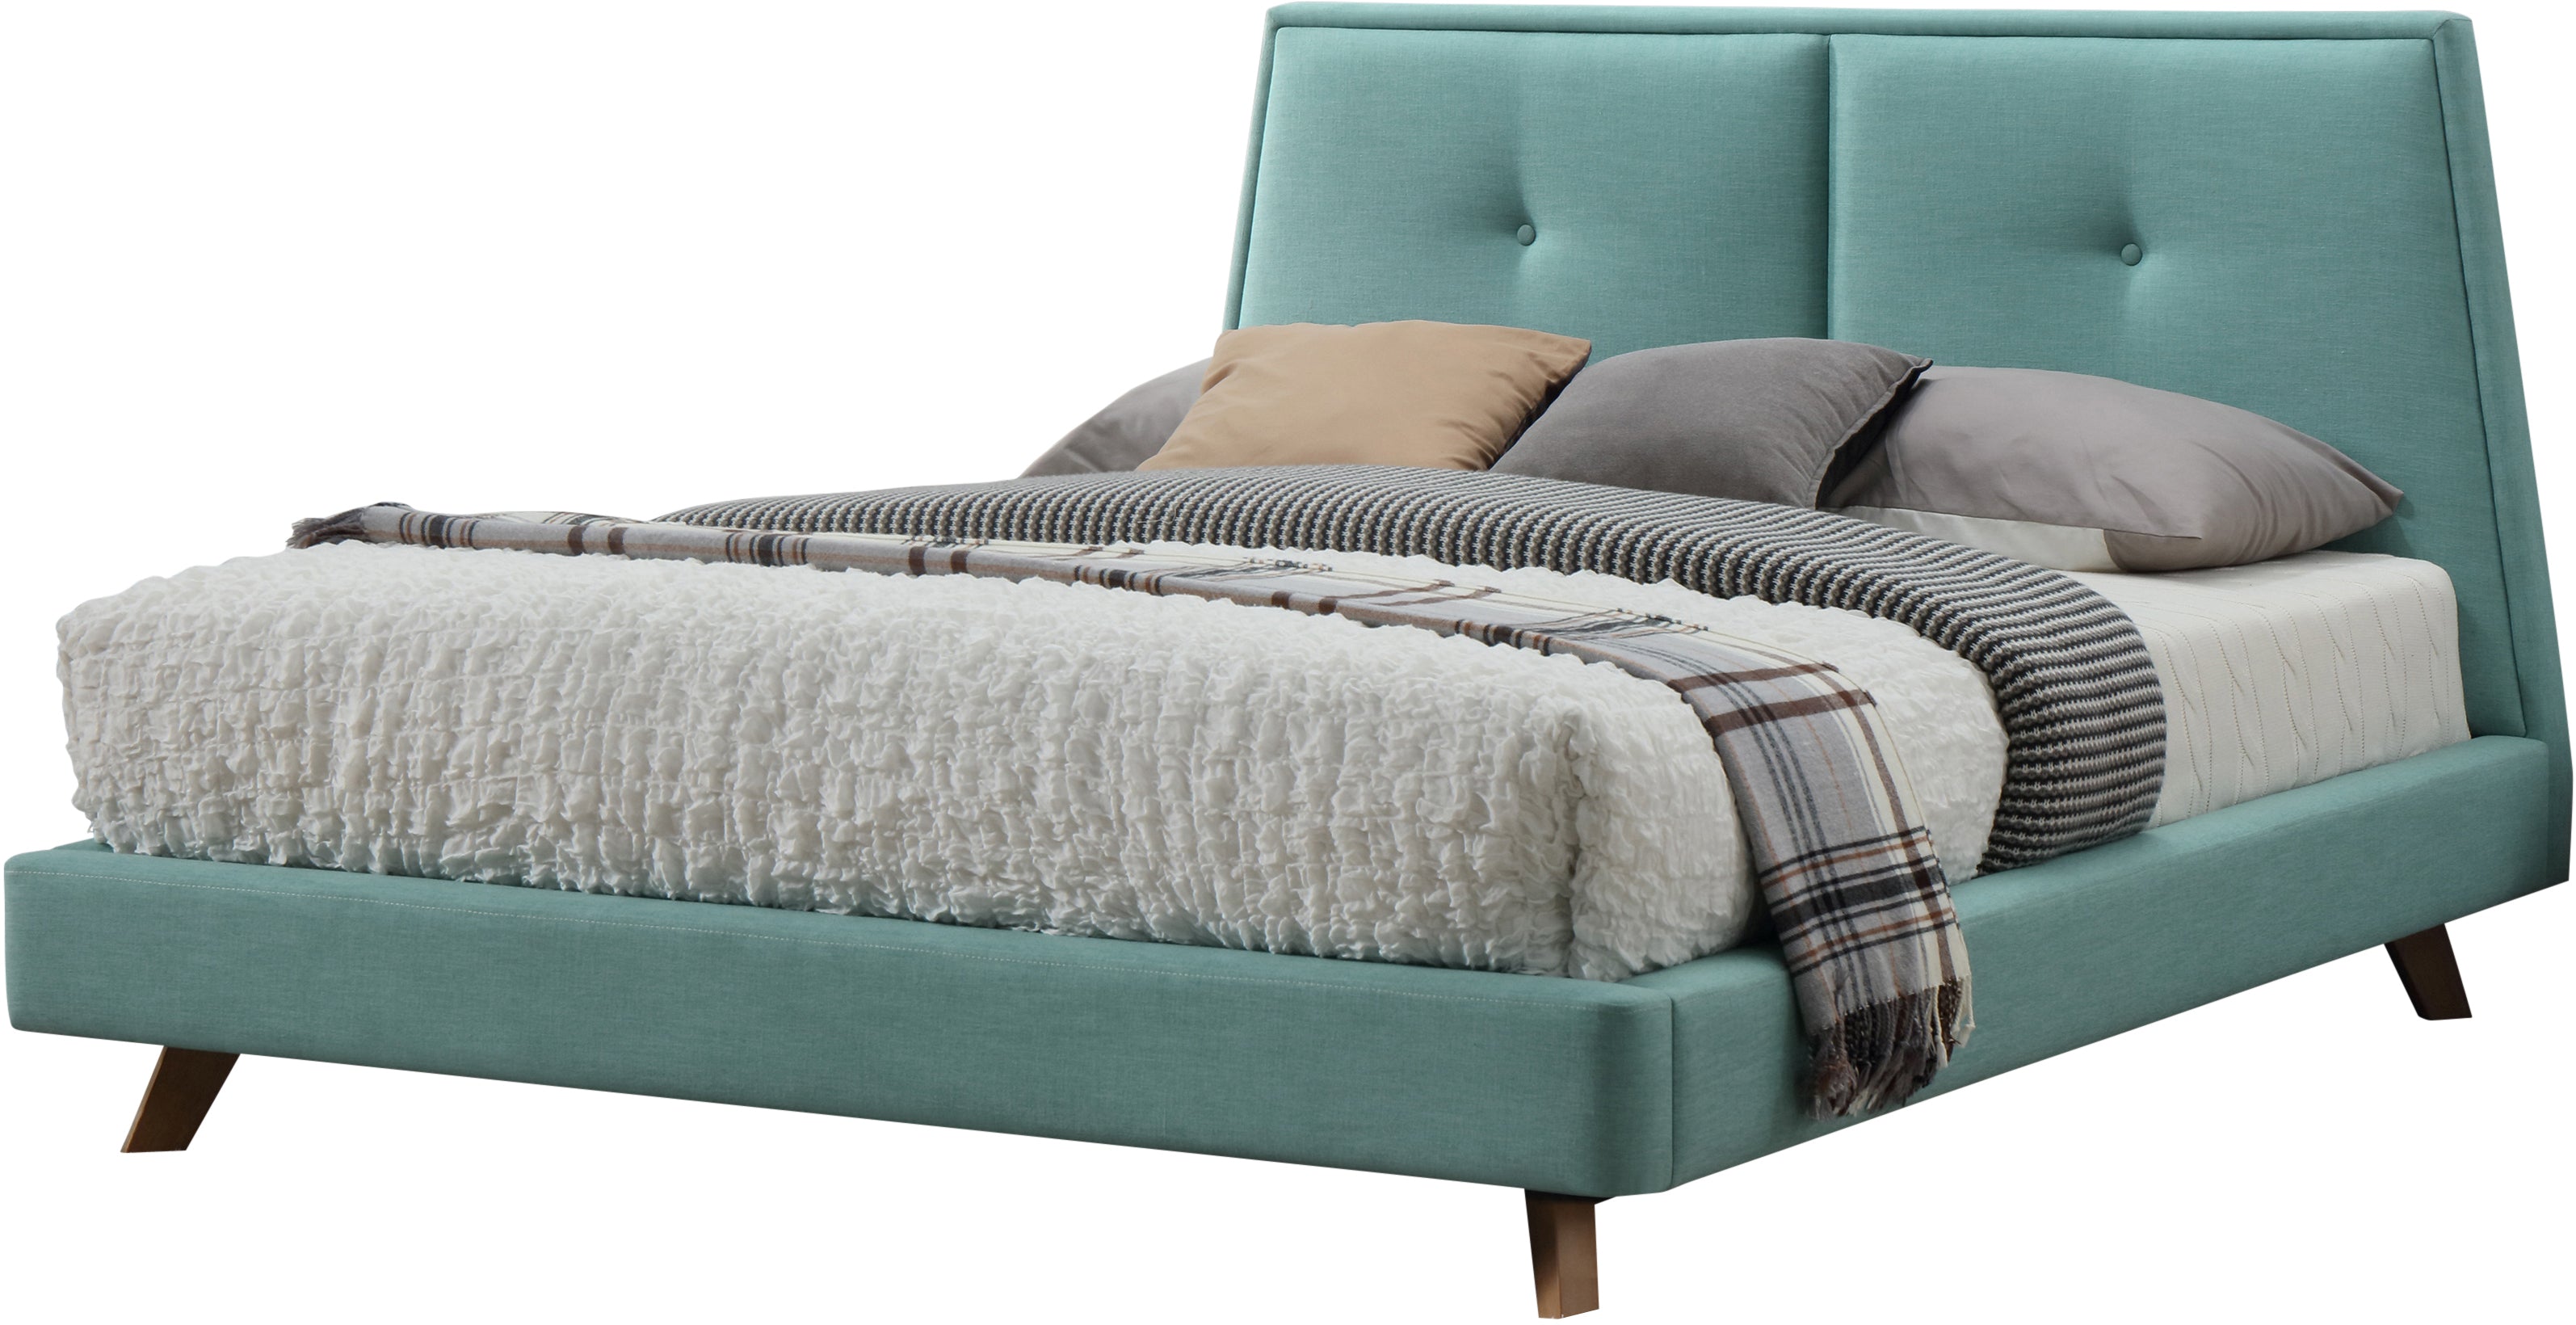 Kenzie Upholstered Platform Bed - Turquoise